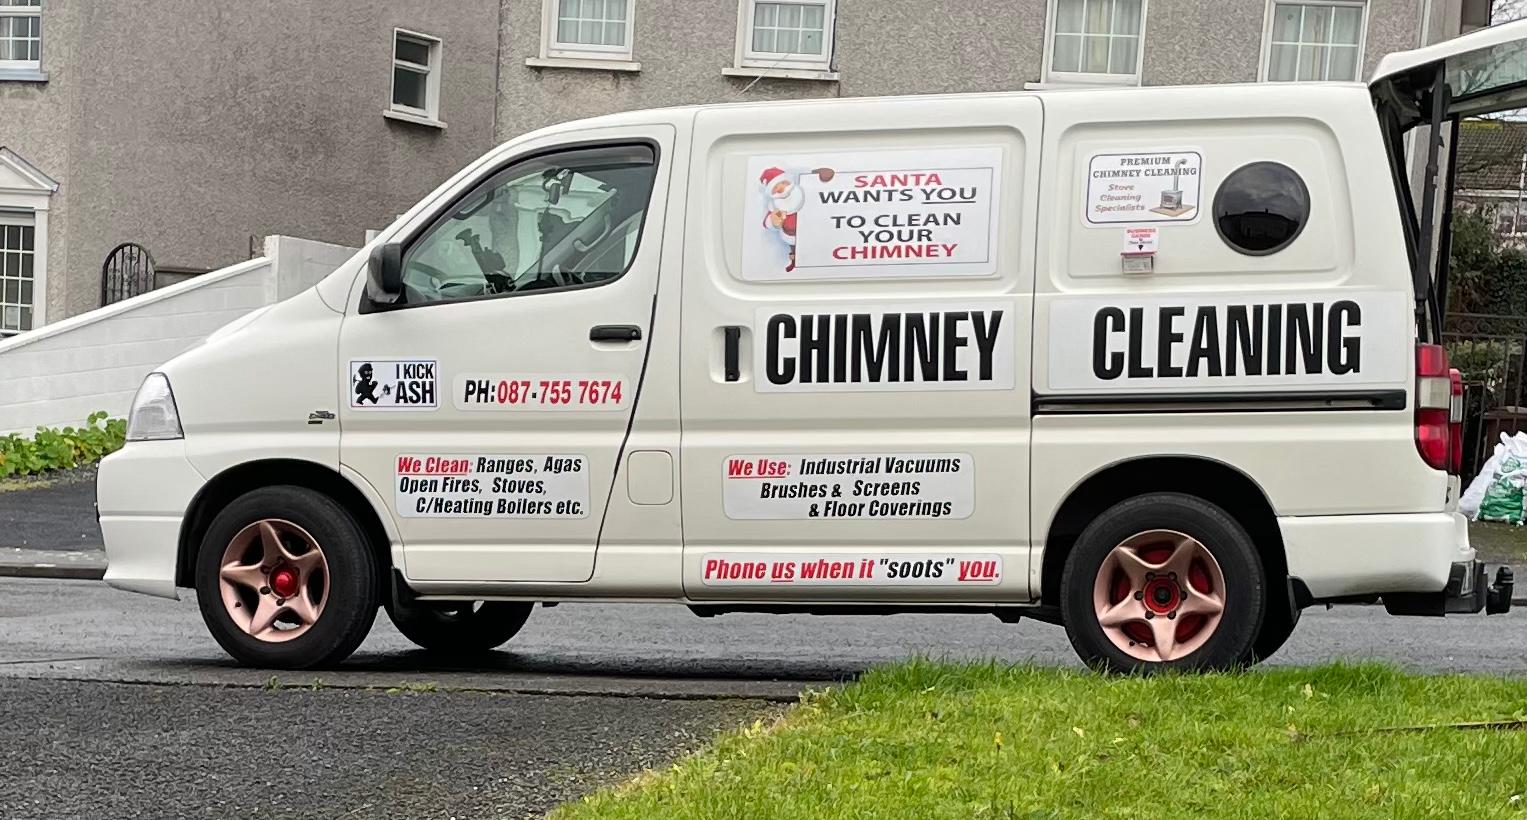 Premium Chimney Cleaning 9